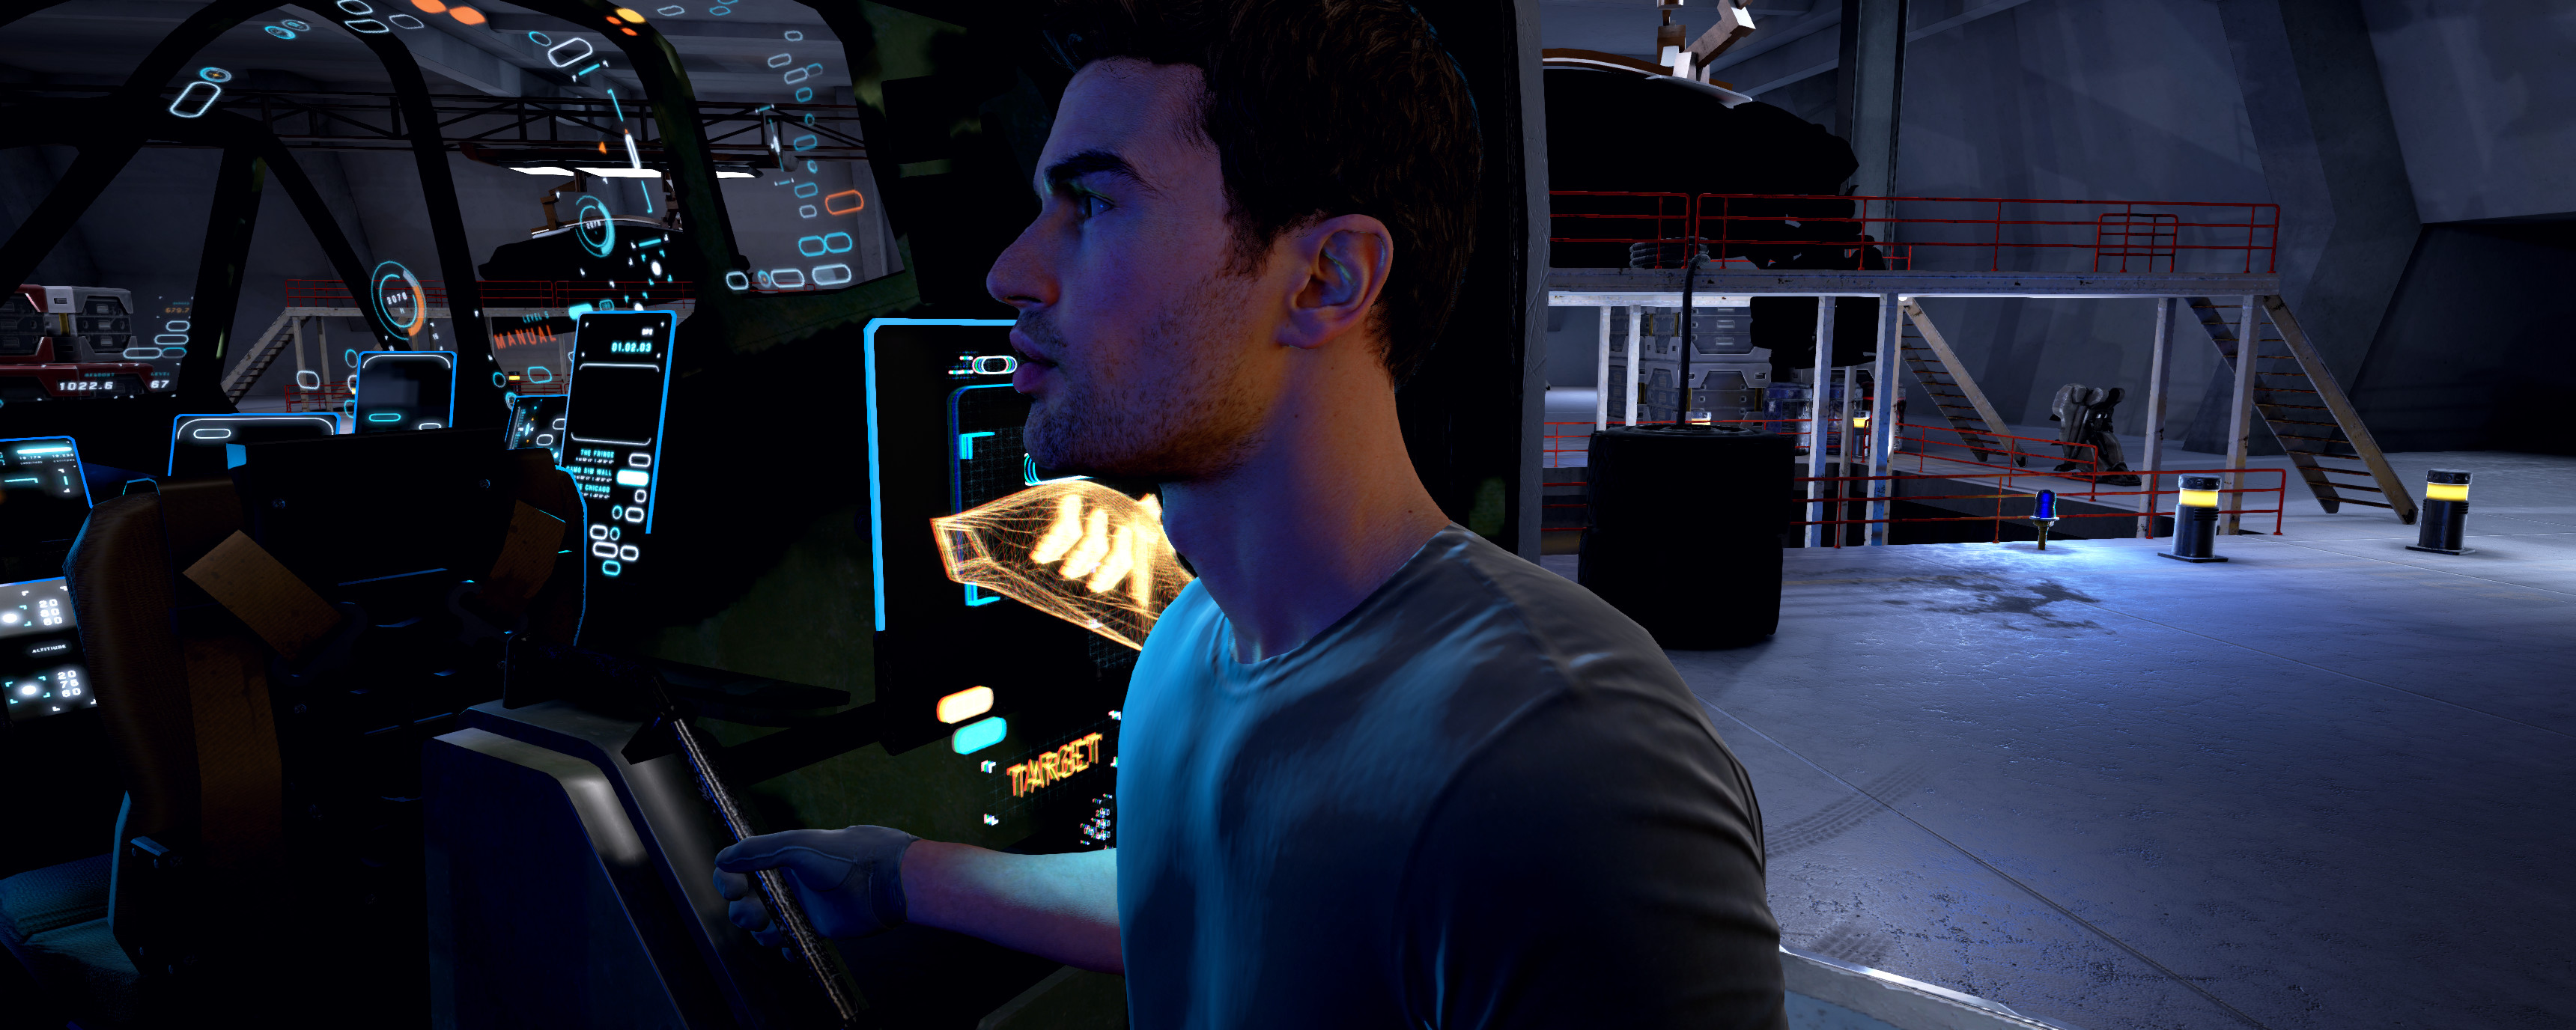 The Divergent Series: Allegiant VR screenshot